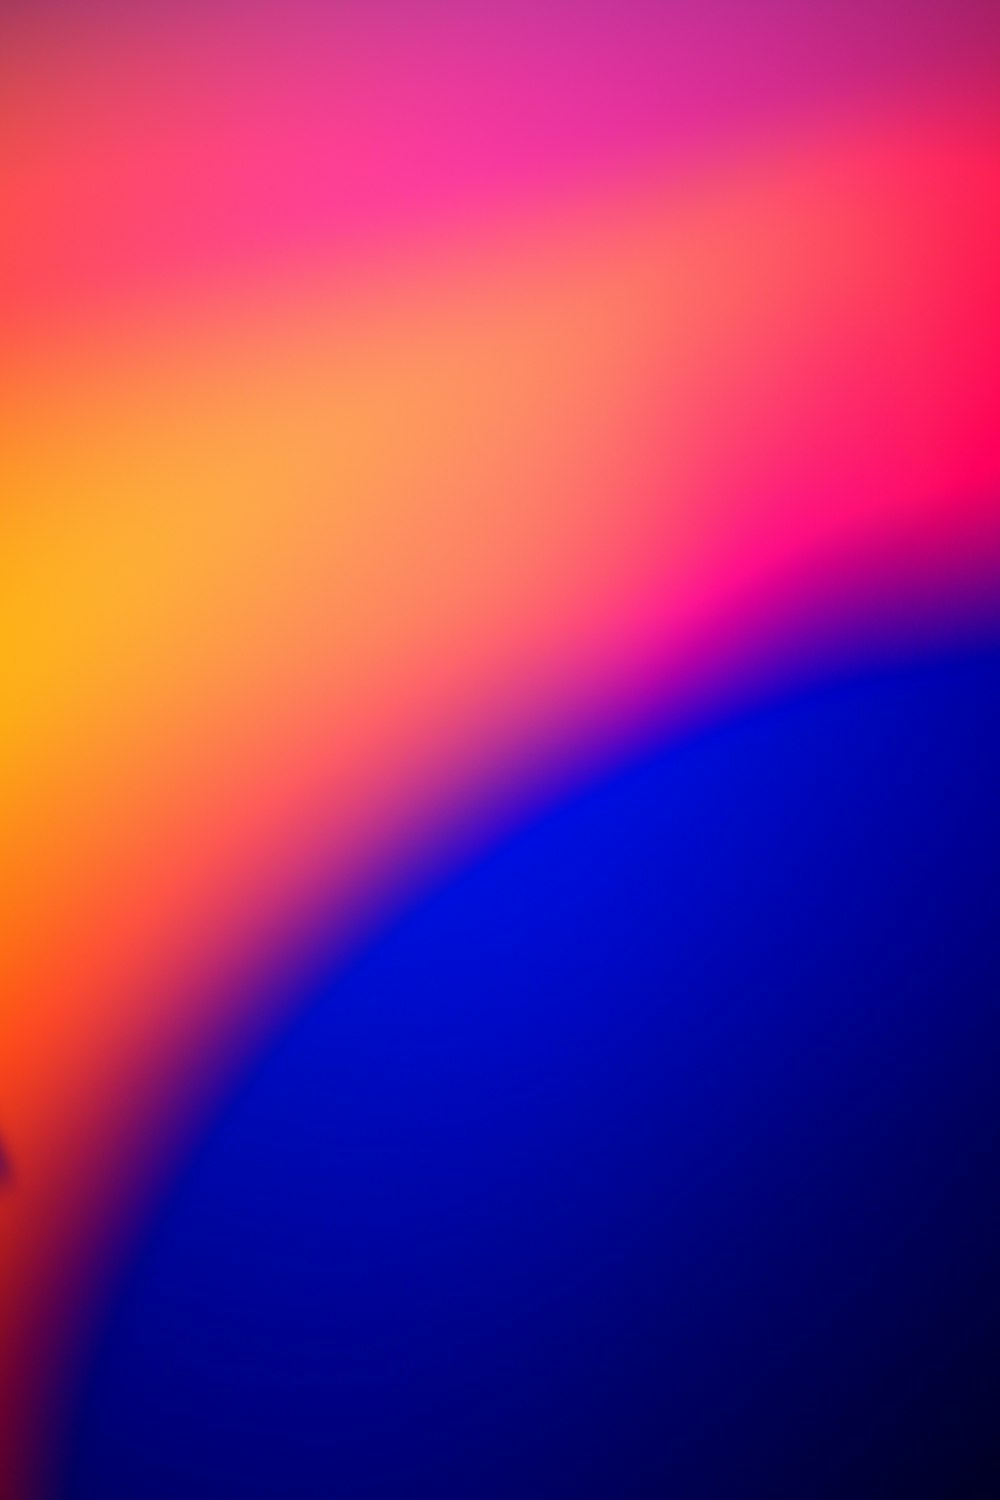 blue and orange light digital wallpaper photo – Free Texture Image on  Unsplash